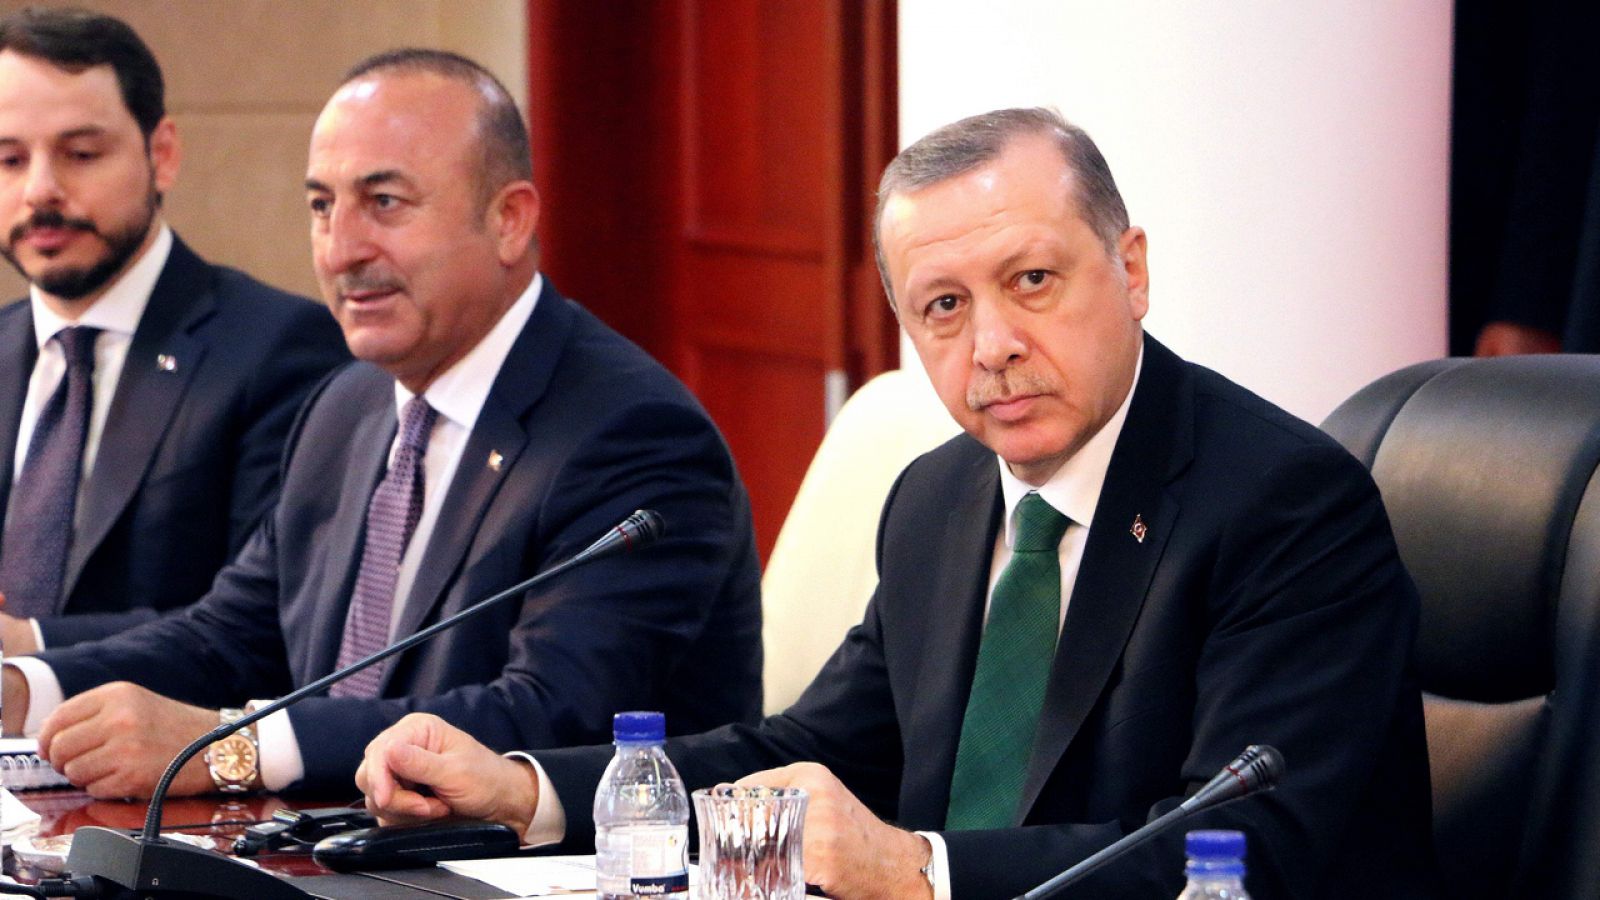 El presidente turco, Recep Tayyip Erdogan, en primer término junto al ministro de Asuntos Exteriores turco, Mevlut Cavusoglu.